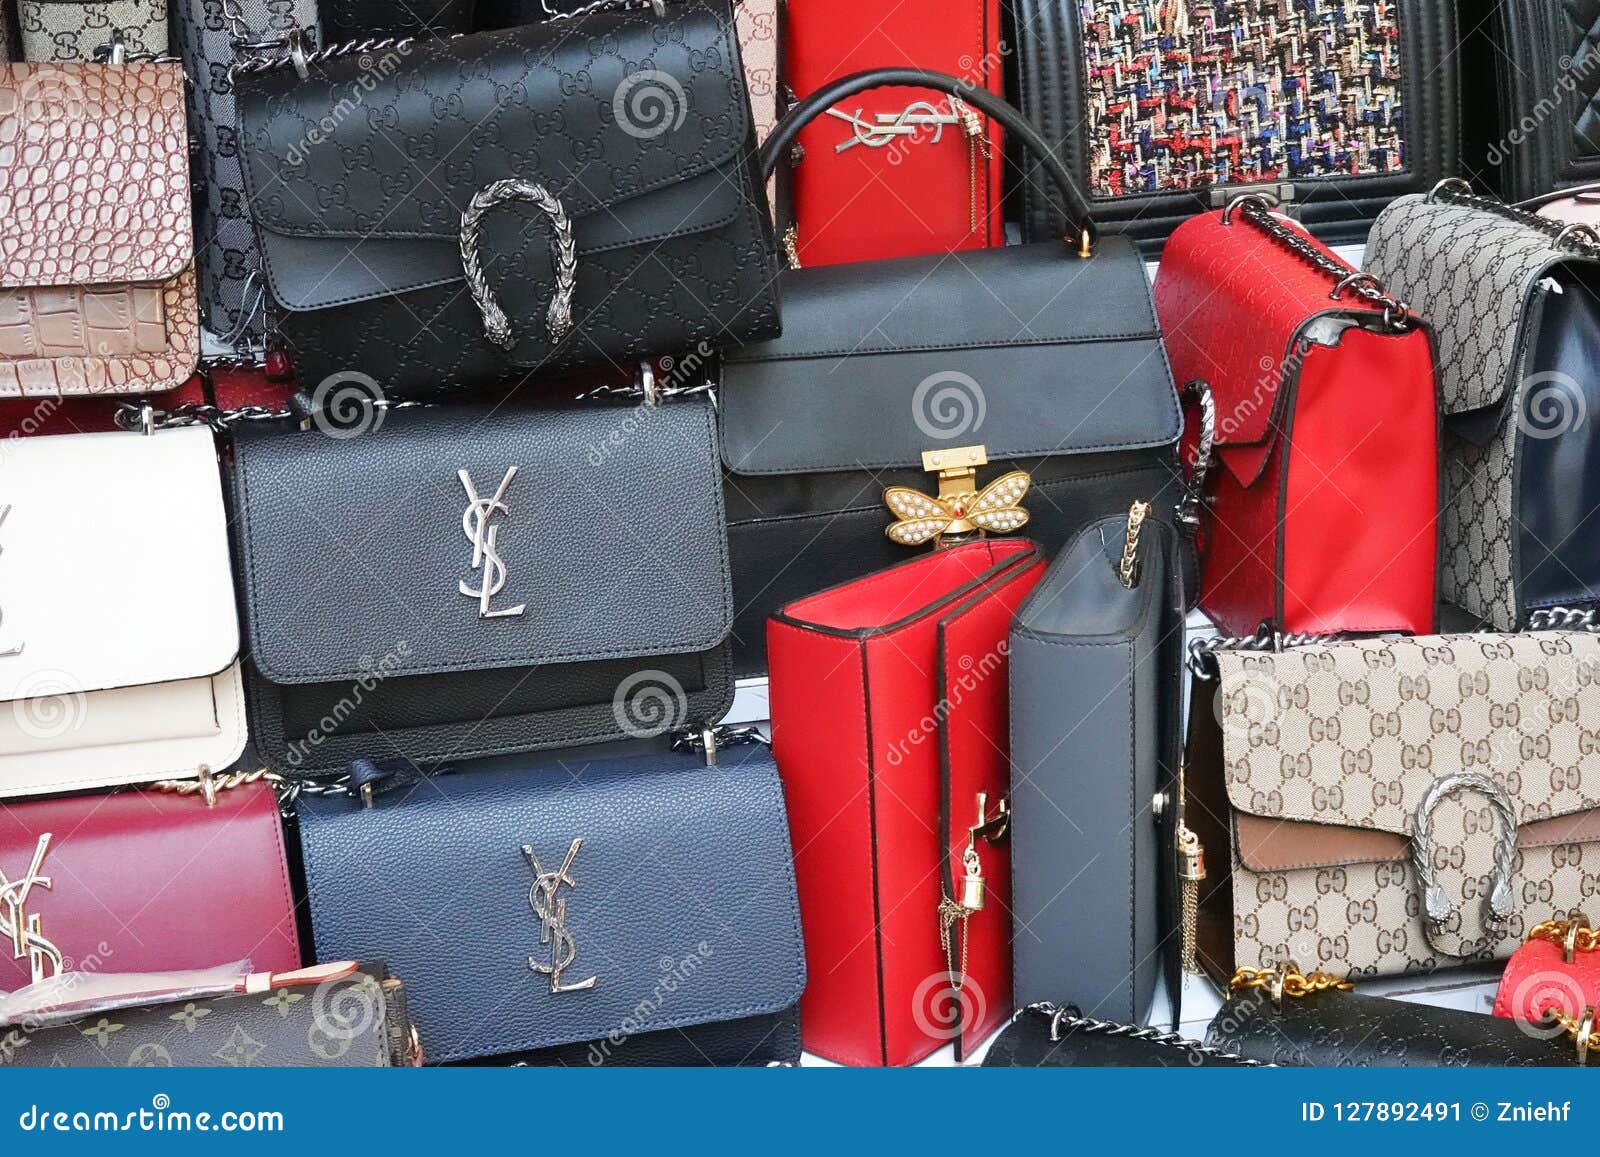 Louis Vuitton Purse For Women At Discounted Price - Dilli Bazar